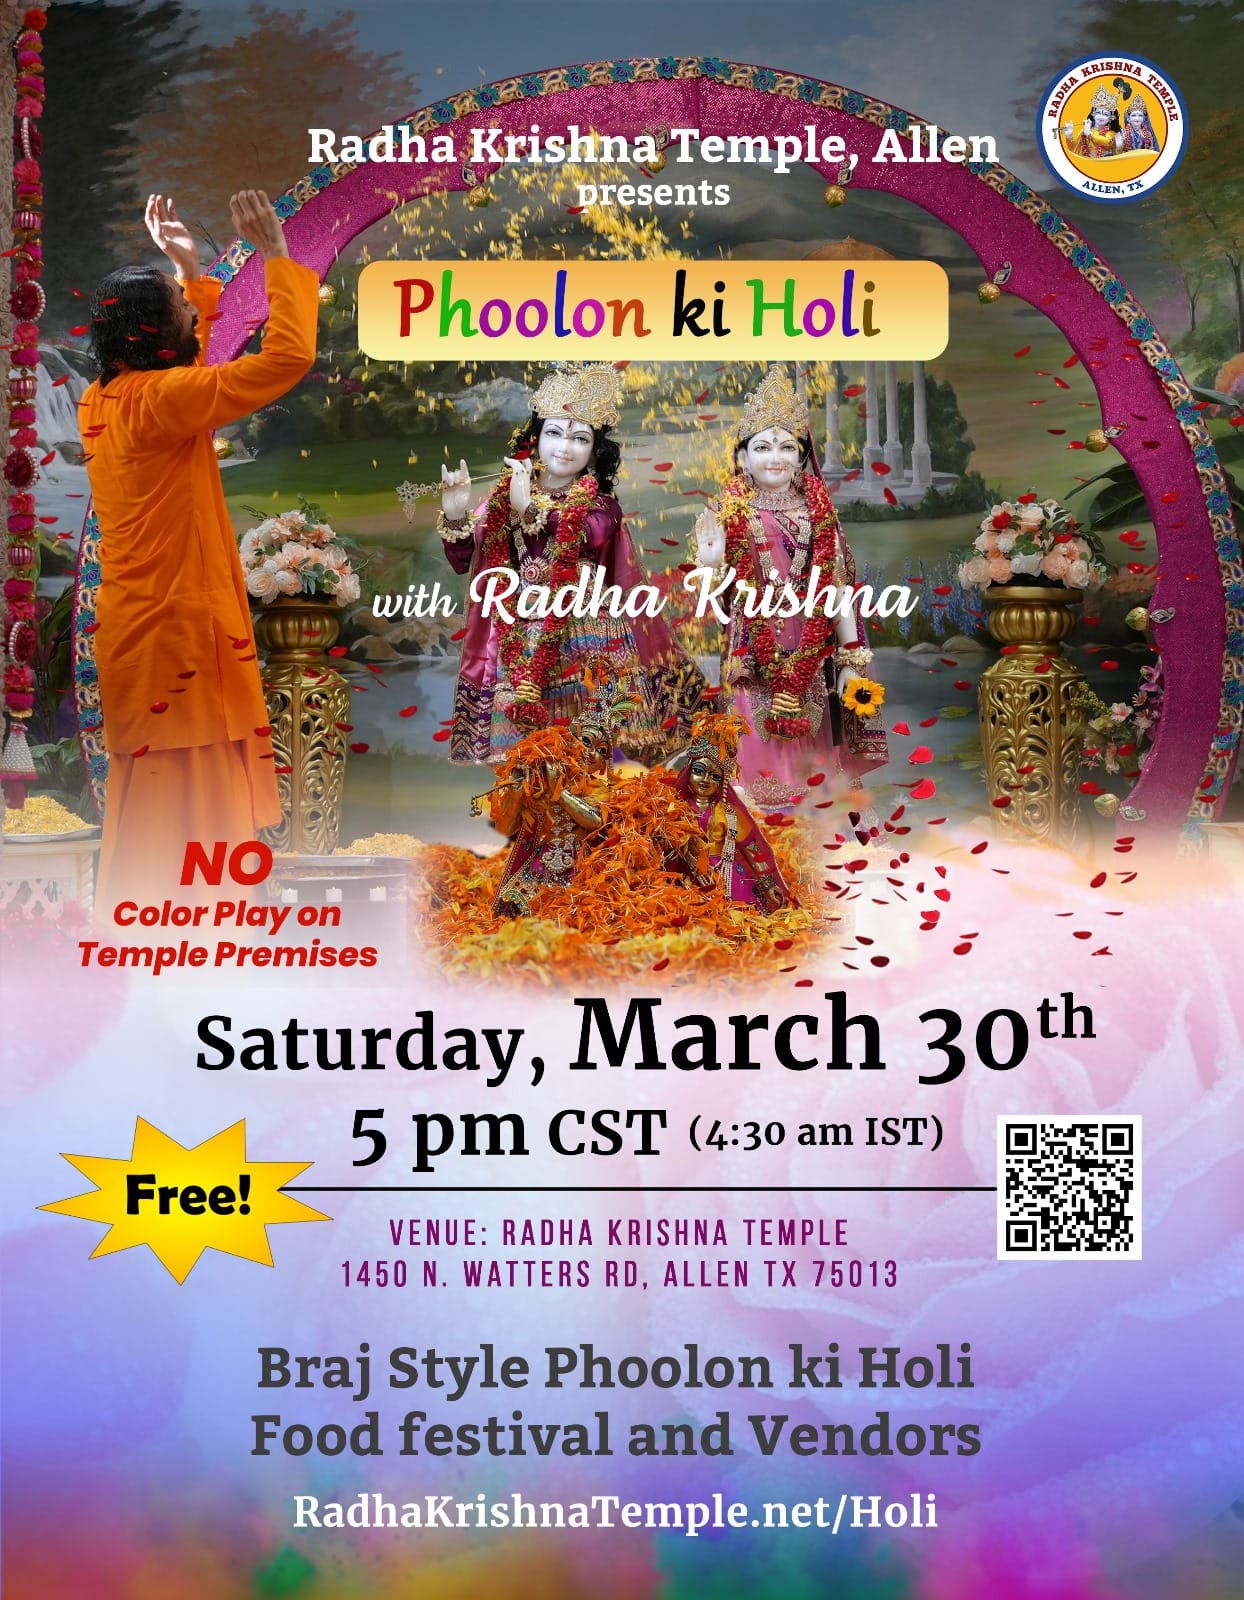 Celebrate the Vibrancy of Phoolon ki Holi at Radha Krishna Temple - March 30th, 